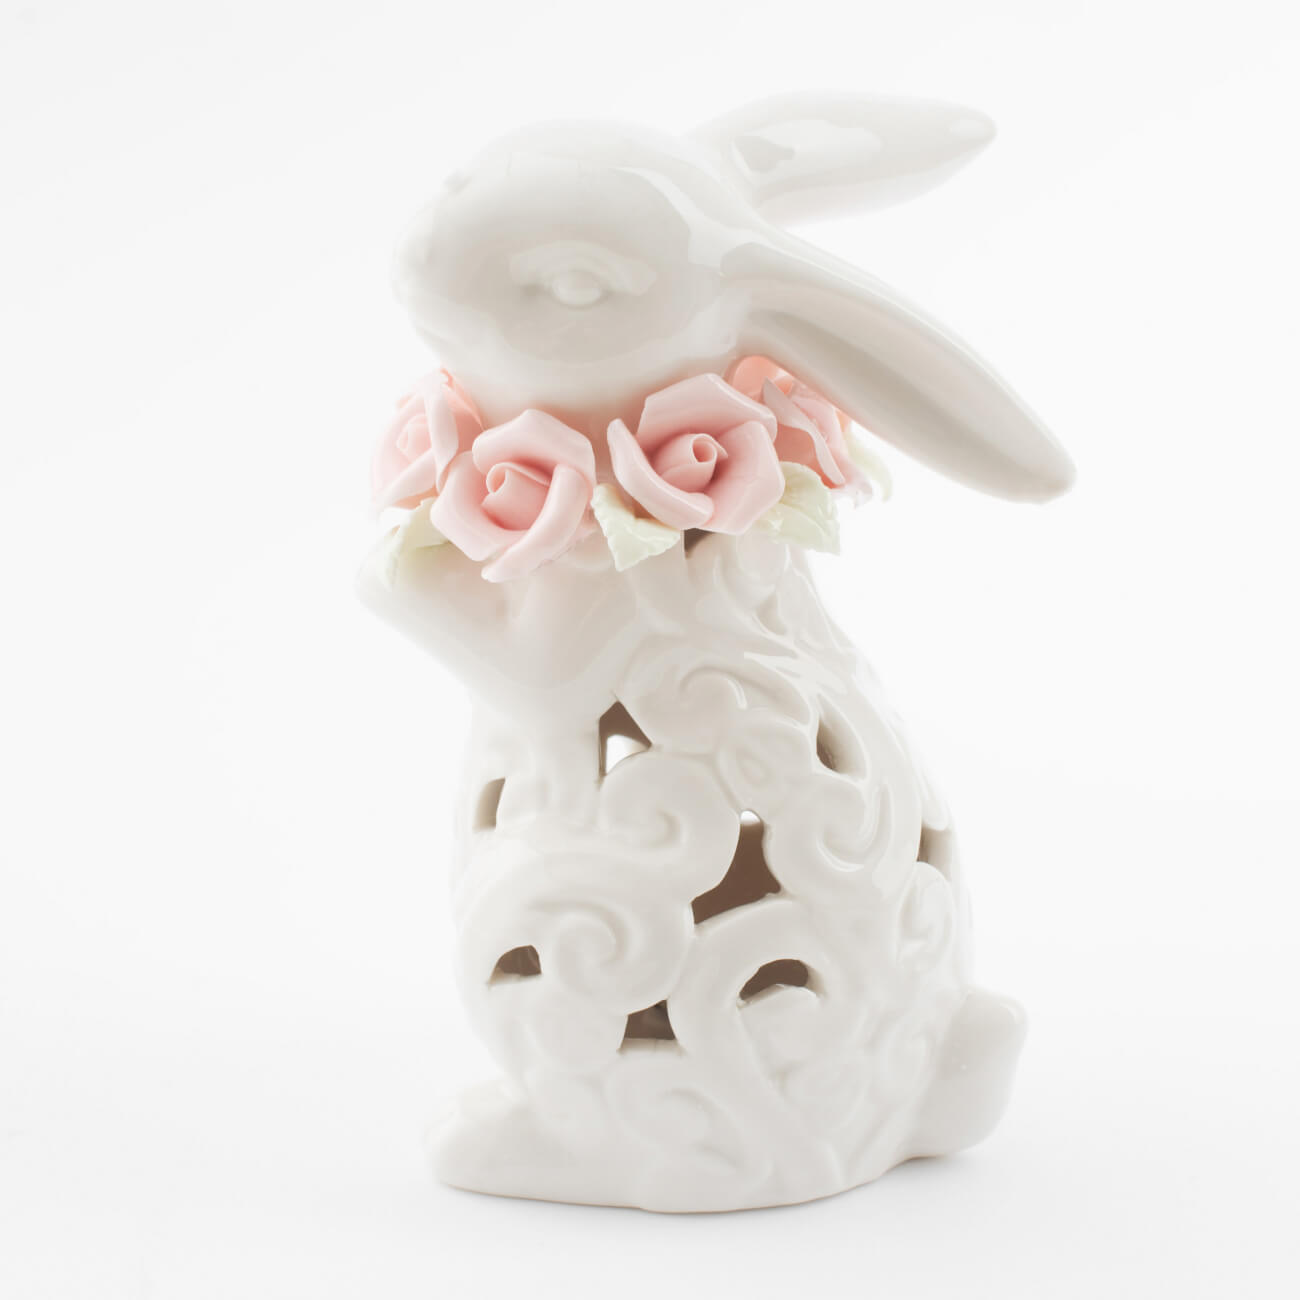 статуэтка 15 см фарфор porcelain белая кролик в ах pure easter Статуэтка с подсветкой, 13 см, фарфор P, белая, Кролик с цветами, Easter